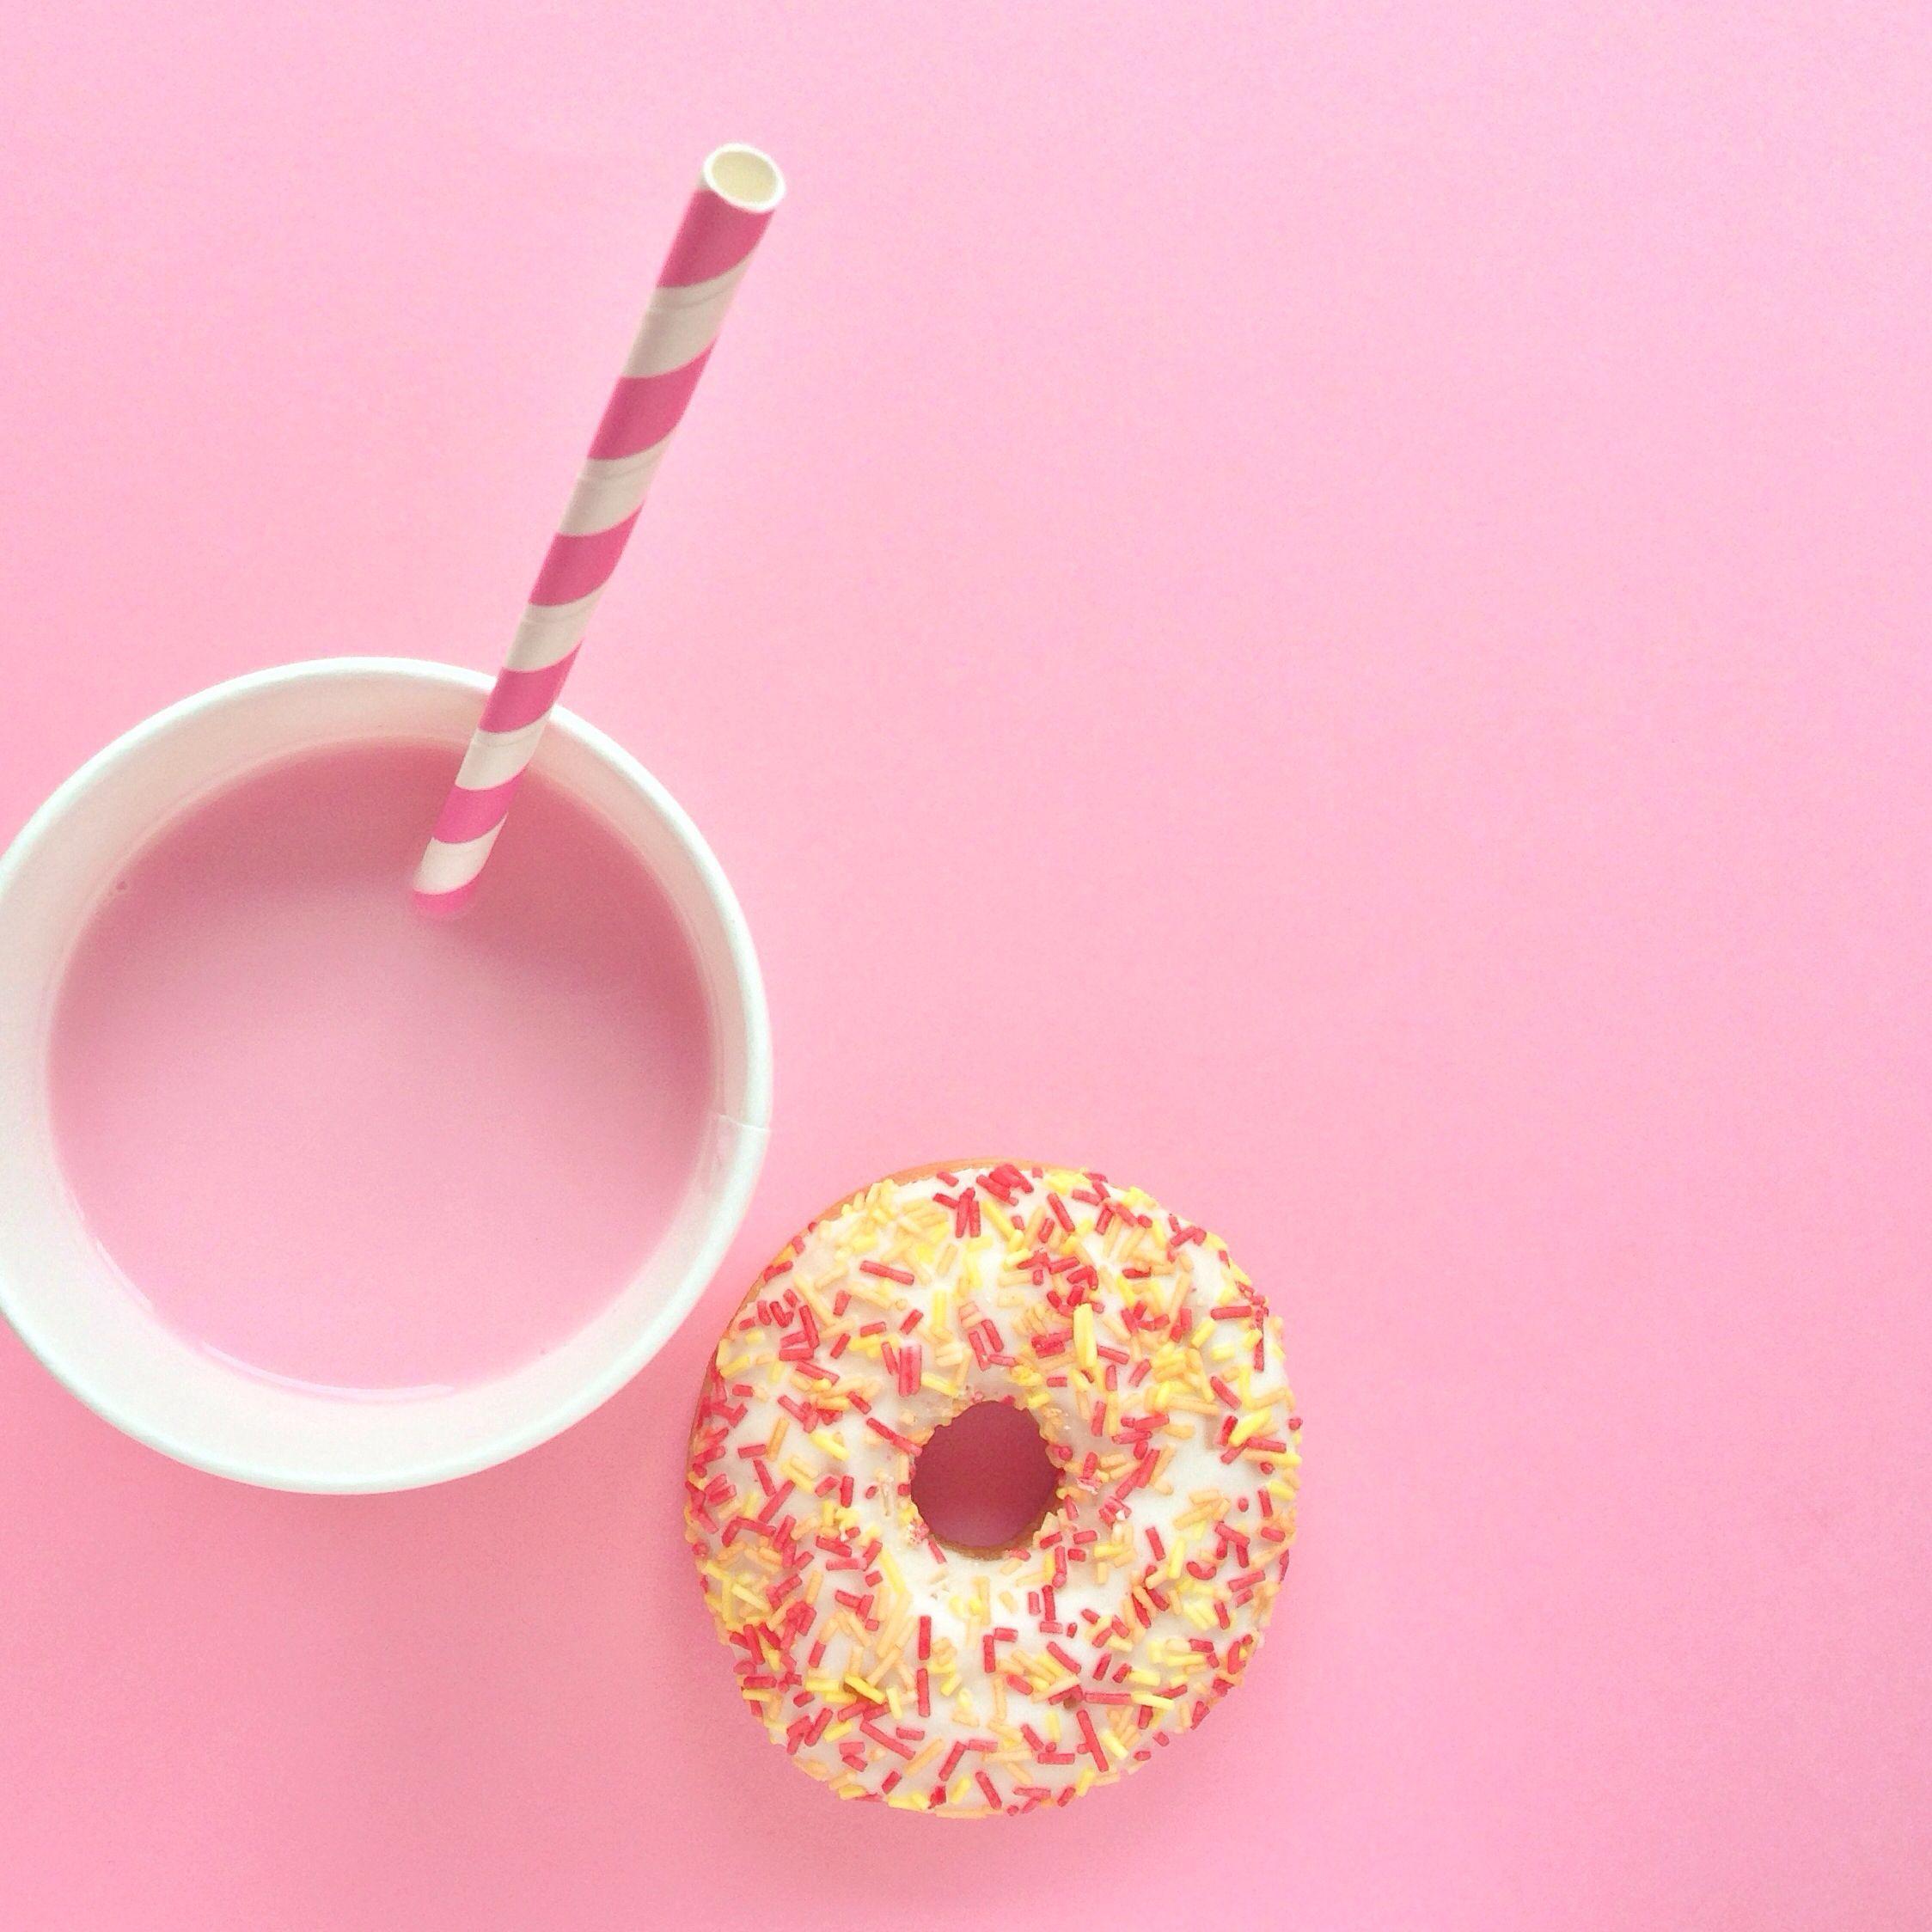 Download Colorful Donuts Doughnuts Donuts RoyaltyFree Stock Illustration  Image  Pixabay